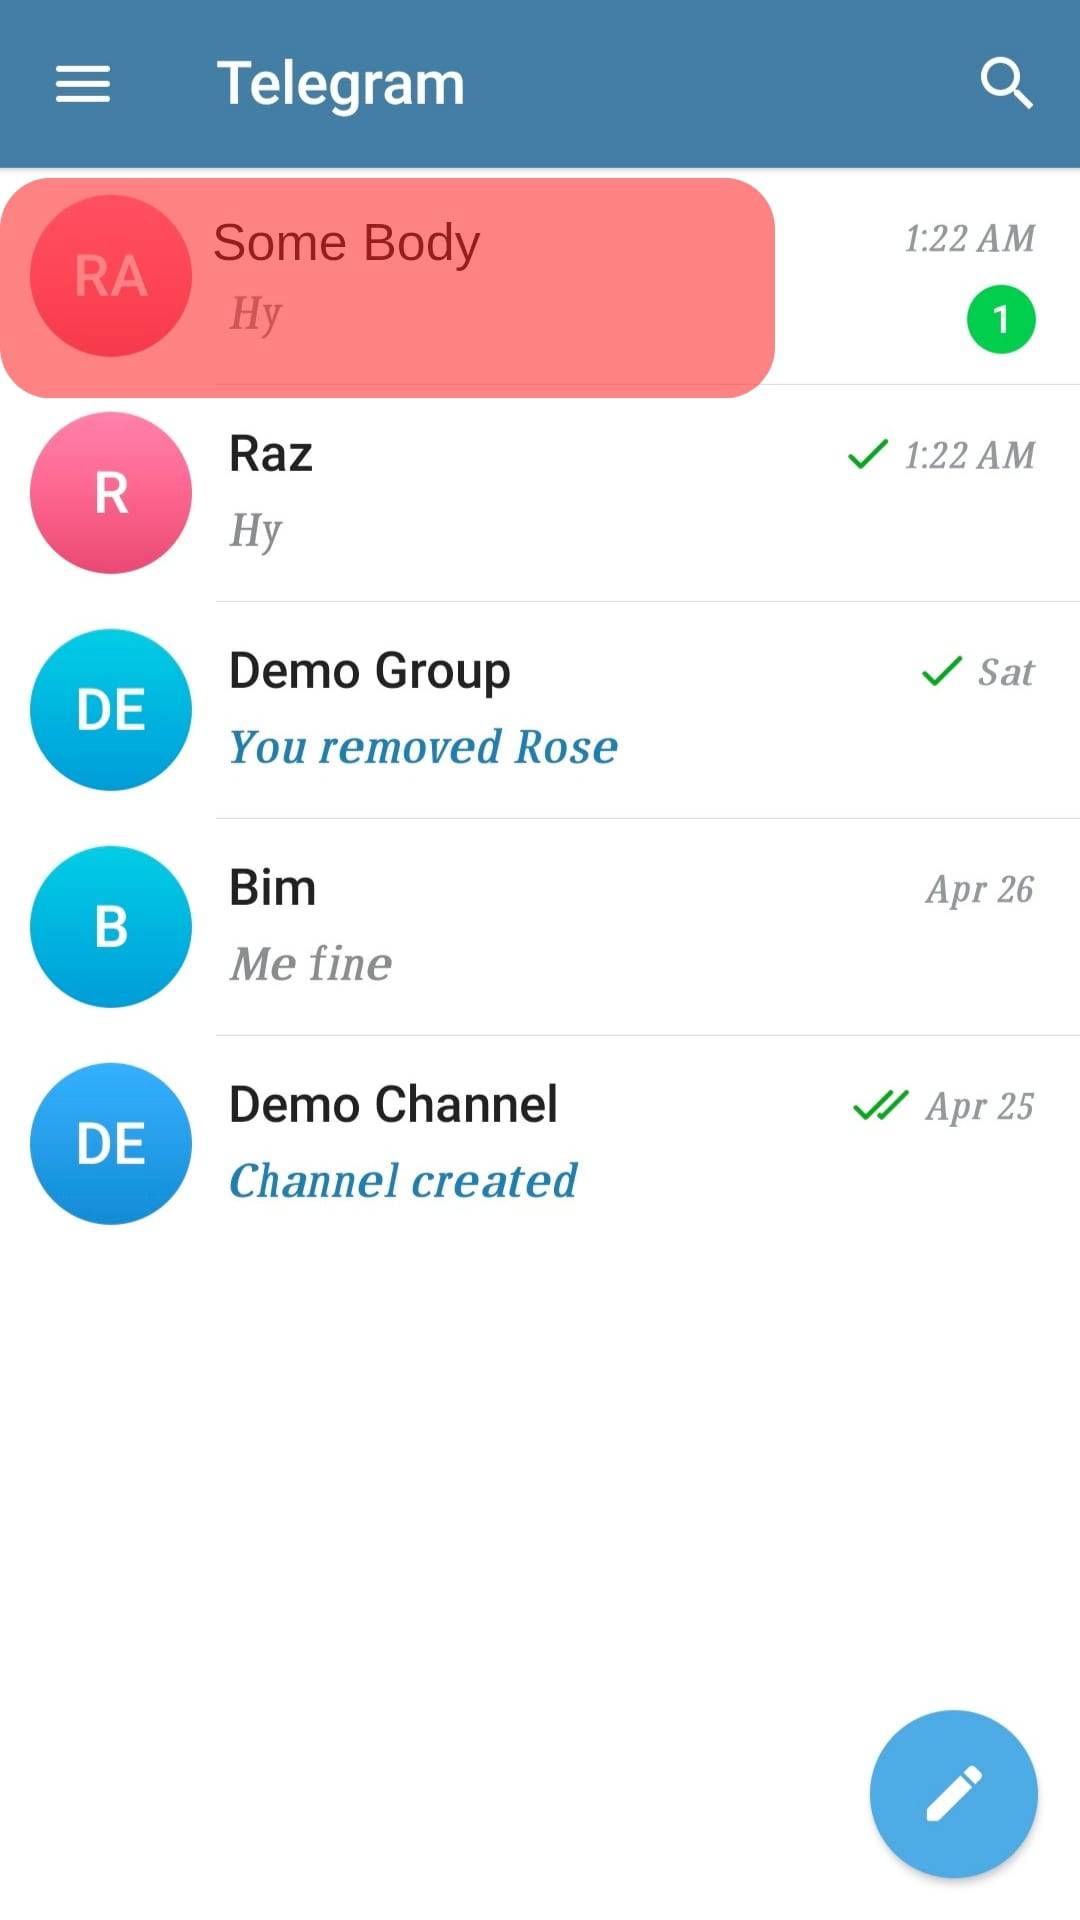 Select The Telegram Conversation